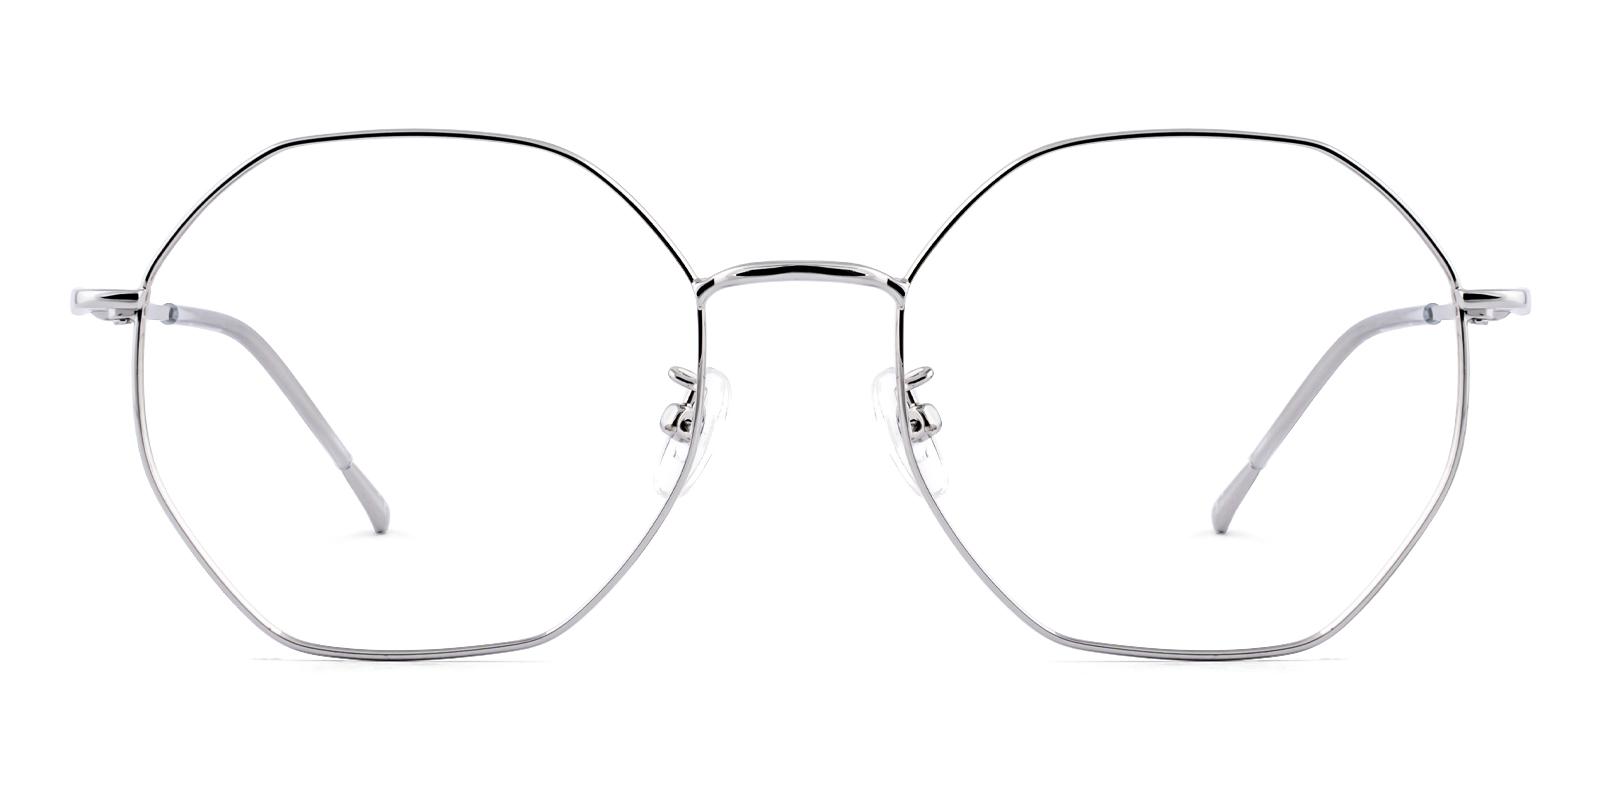 Salieur Silver Metal Eyeglasses , NosePads Frames from ABBE Glasses